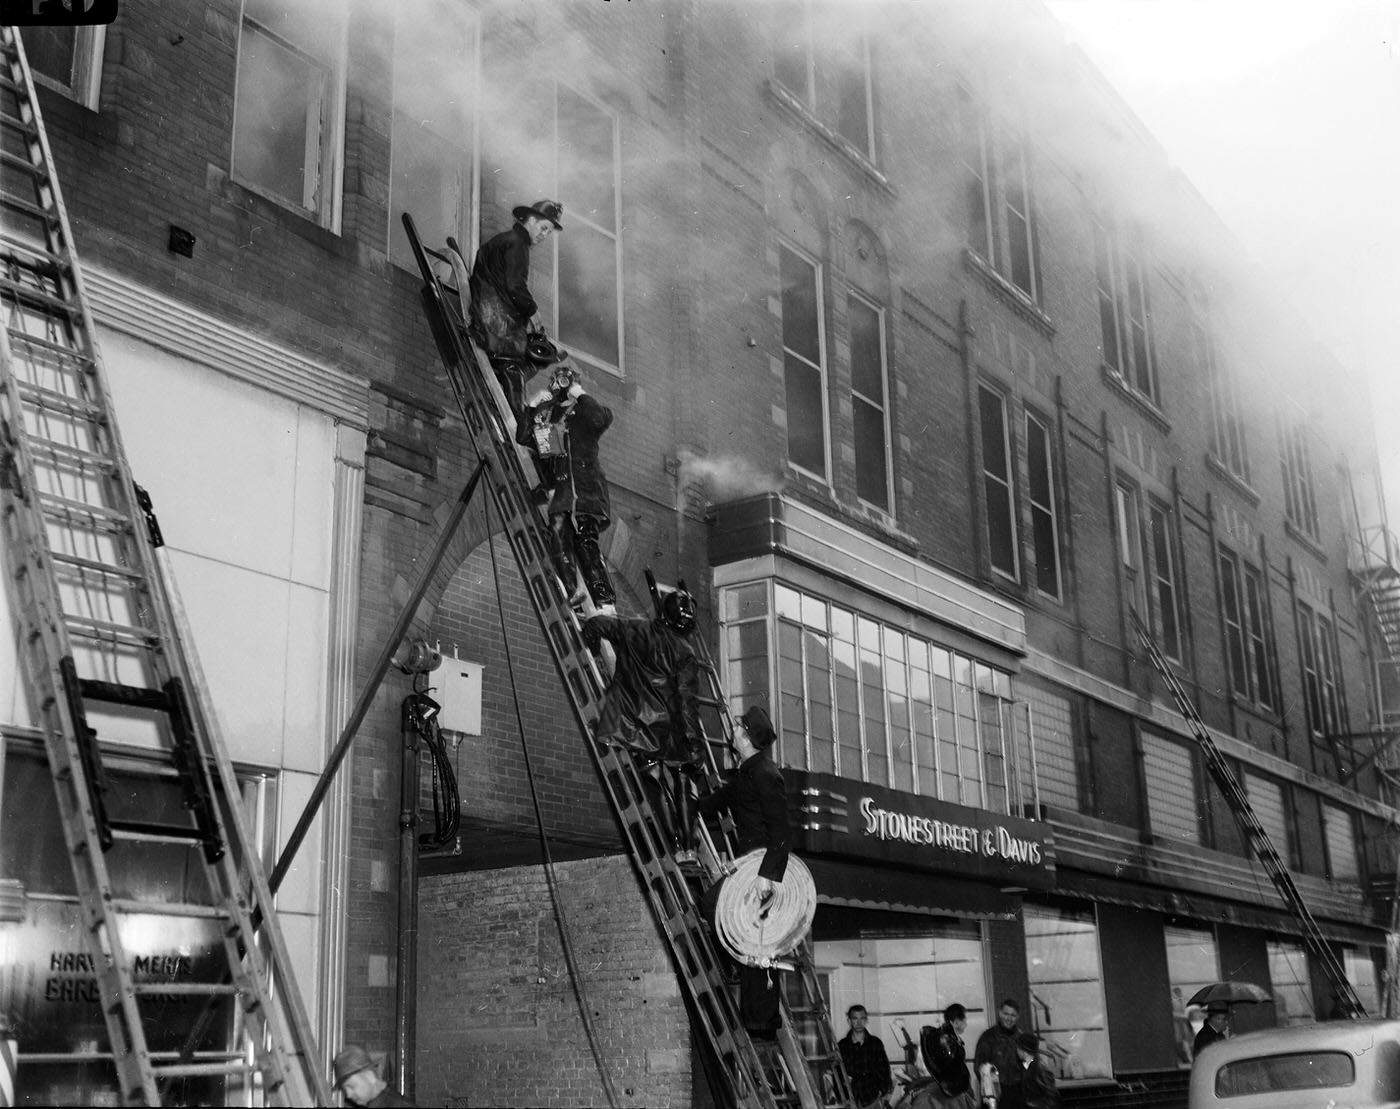 Firemen on ladder fight fire at Metropolitan Hotel building, Fort Worth, Texas, 1943